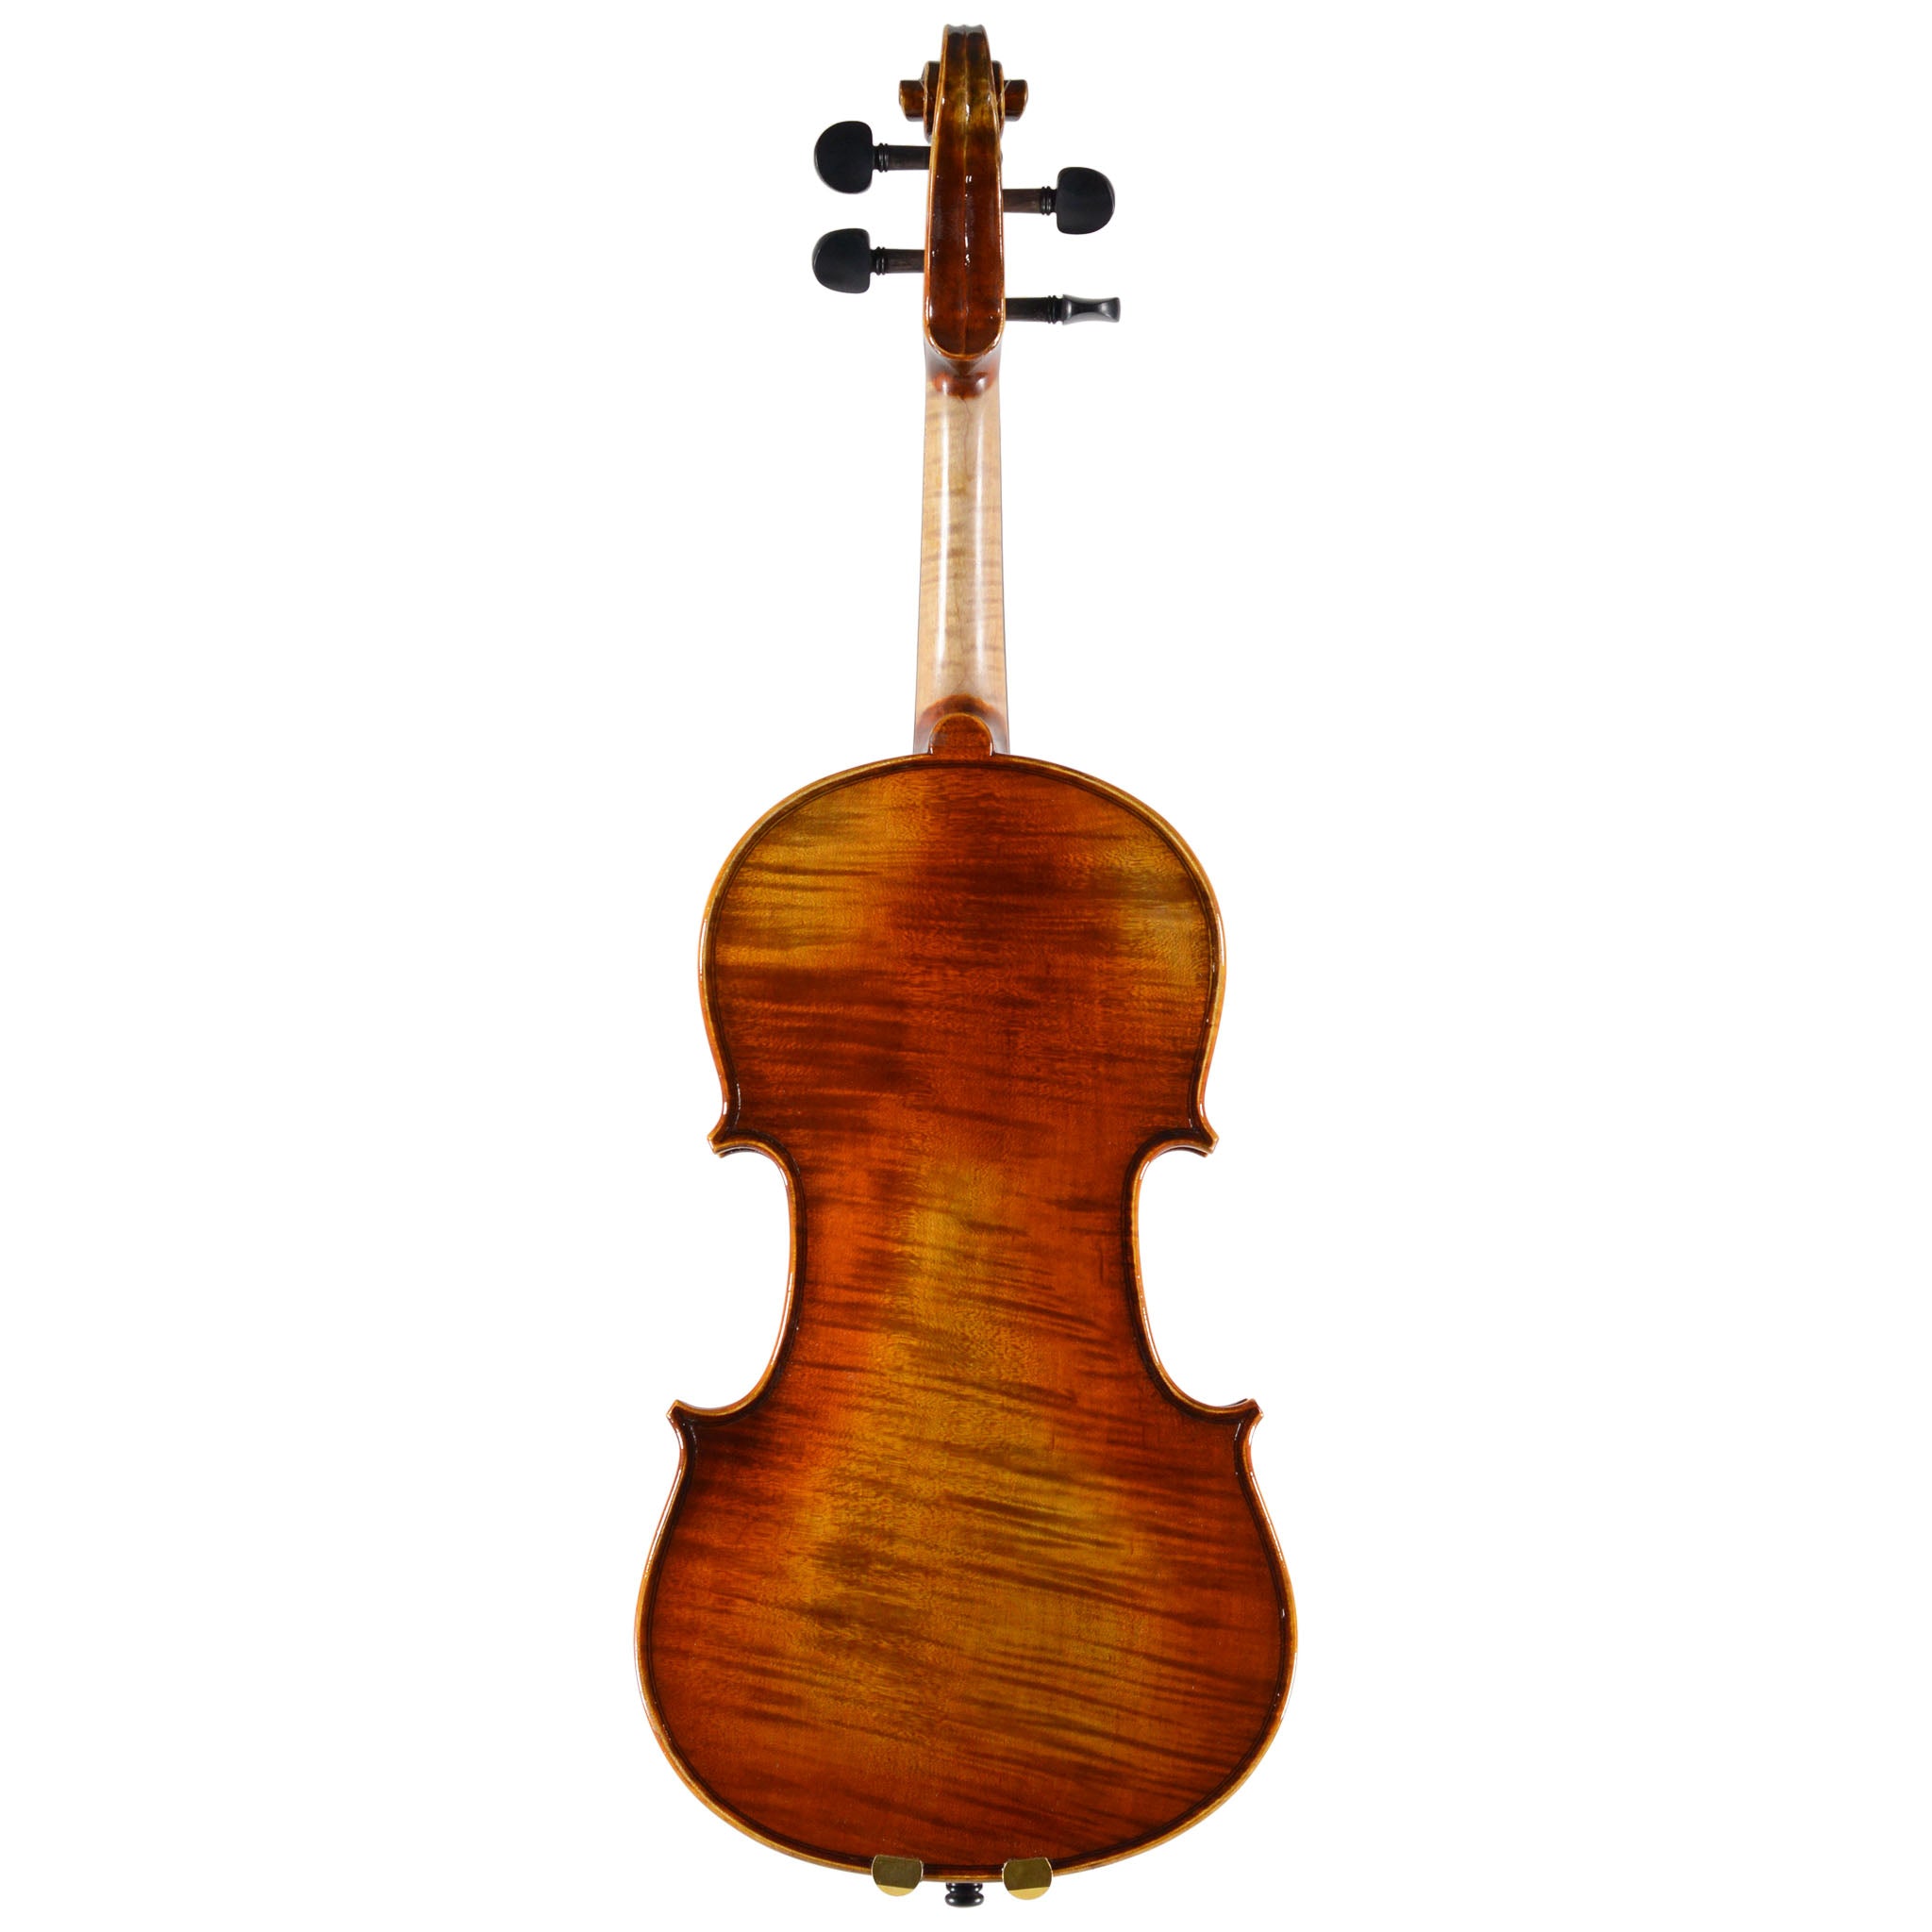 B-stock Fiddlershop Full Size Violin (FS456)